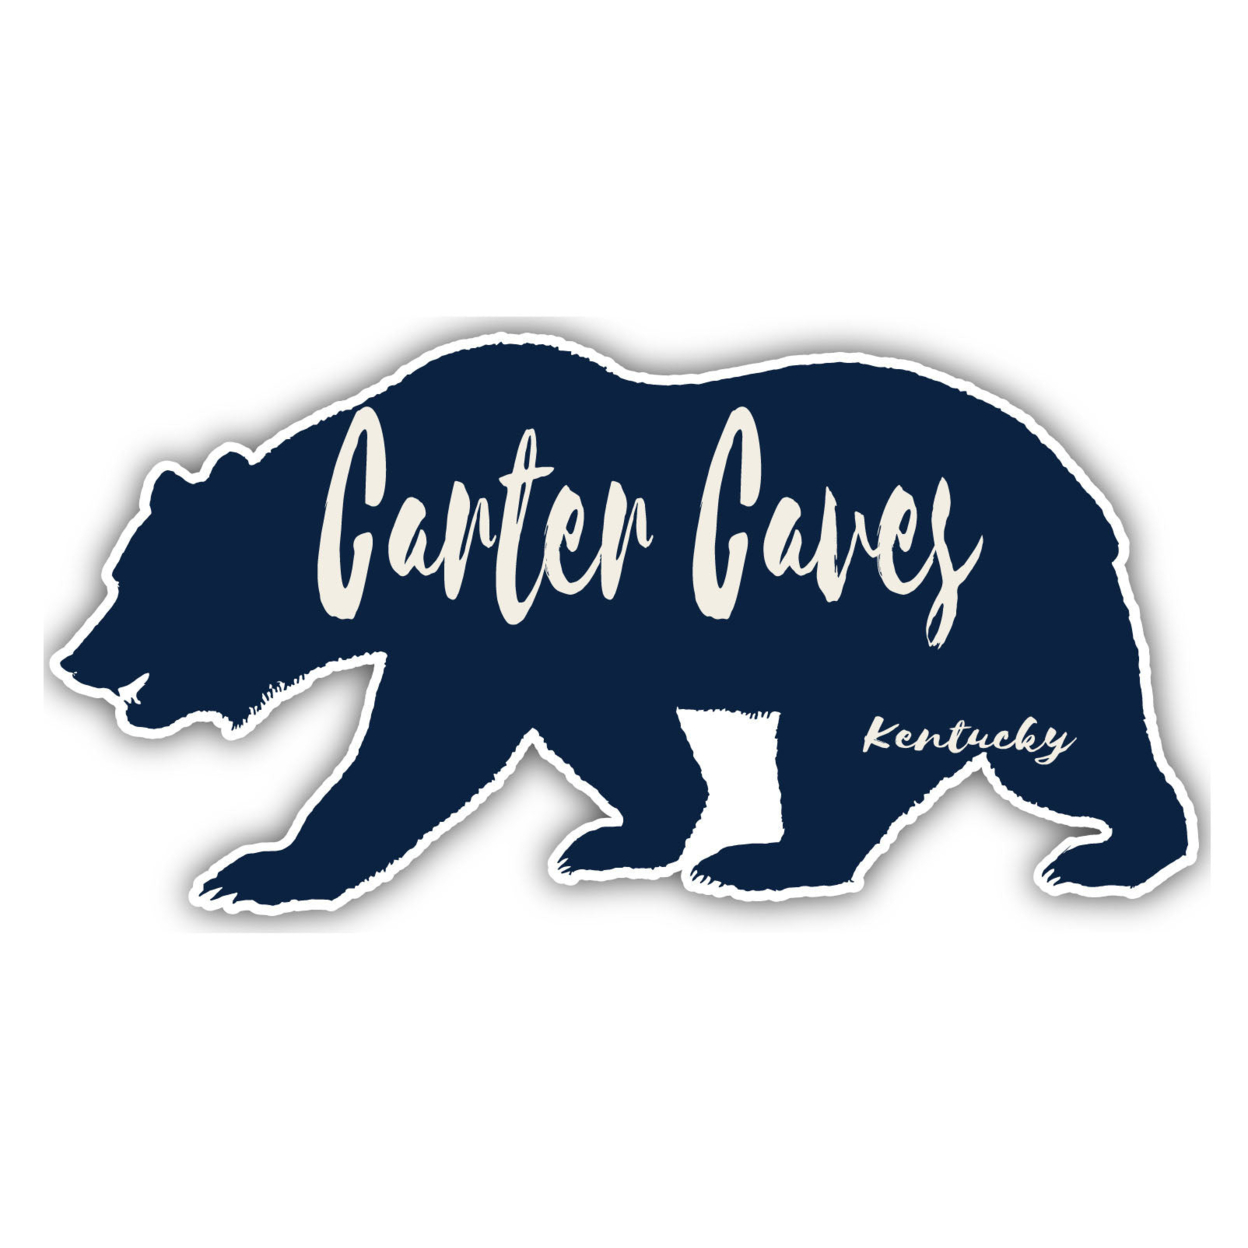 Carter Caves Kentucky Souvenir Decorative Stickers (Choose Theme And Size) - Single Unit, 10-Inch, Bear